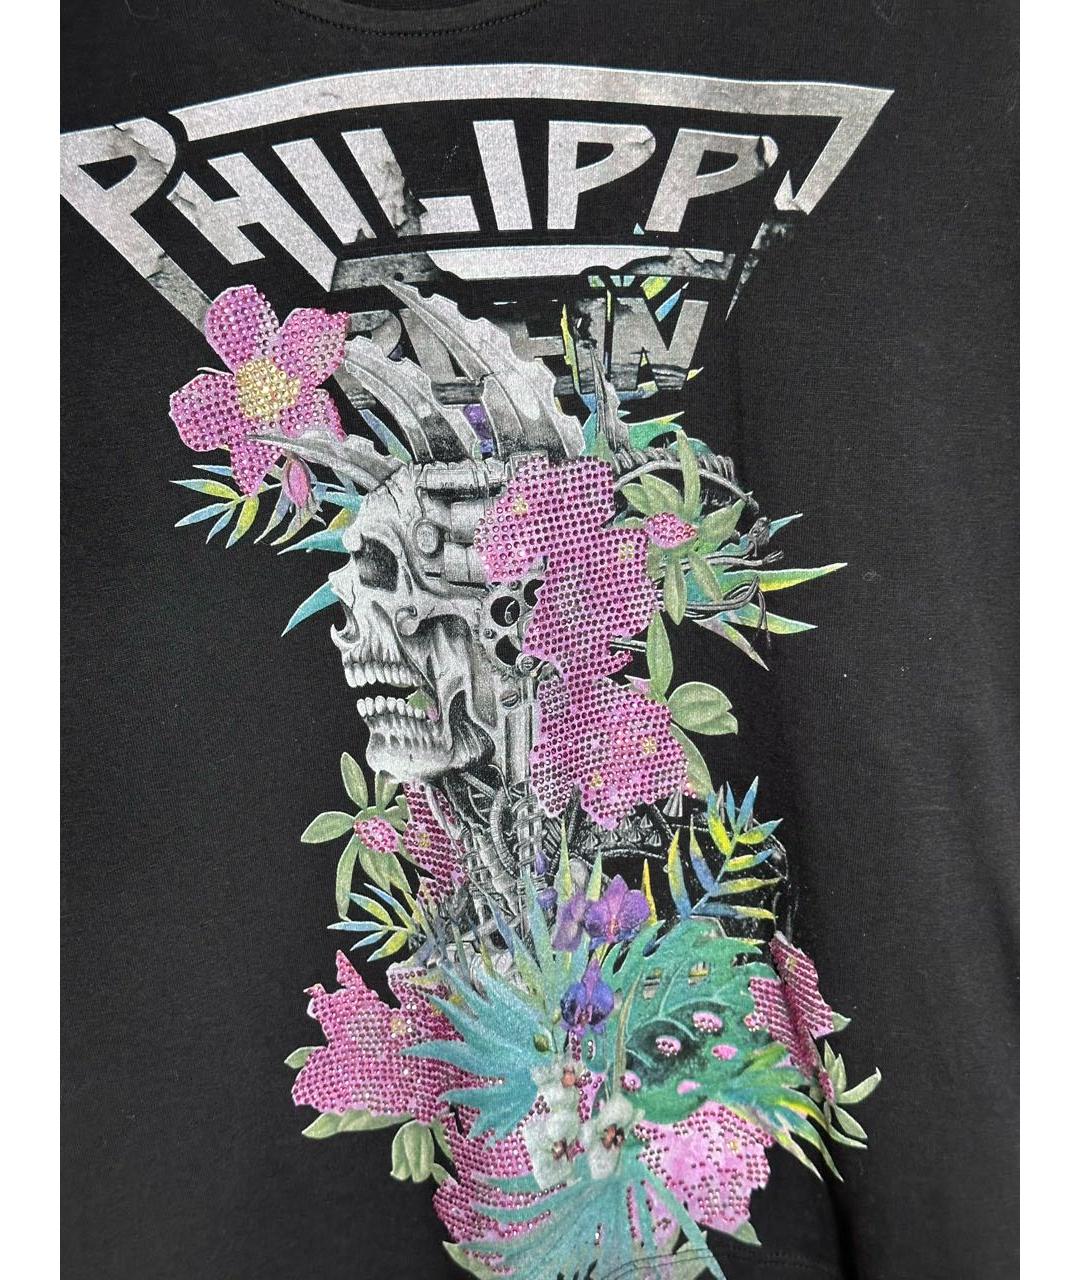 PHILIPP PLEIN Черная футболка, фото 2